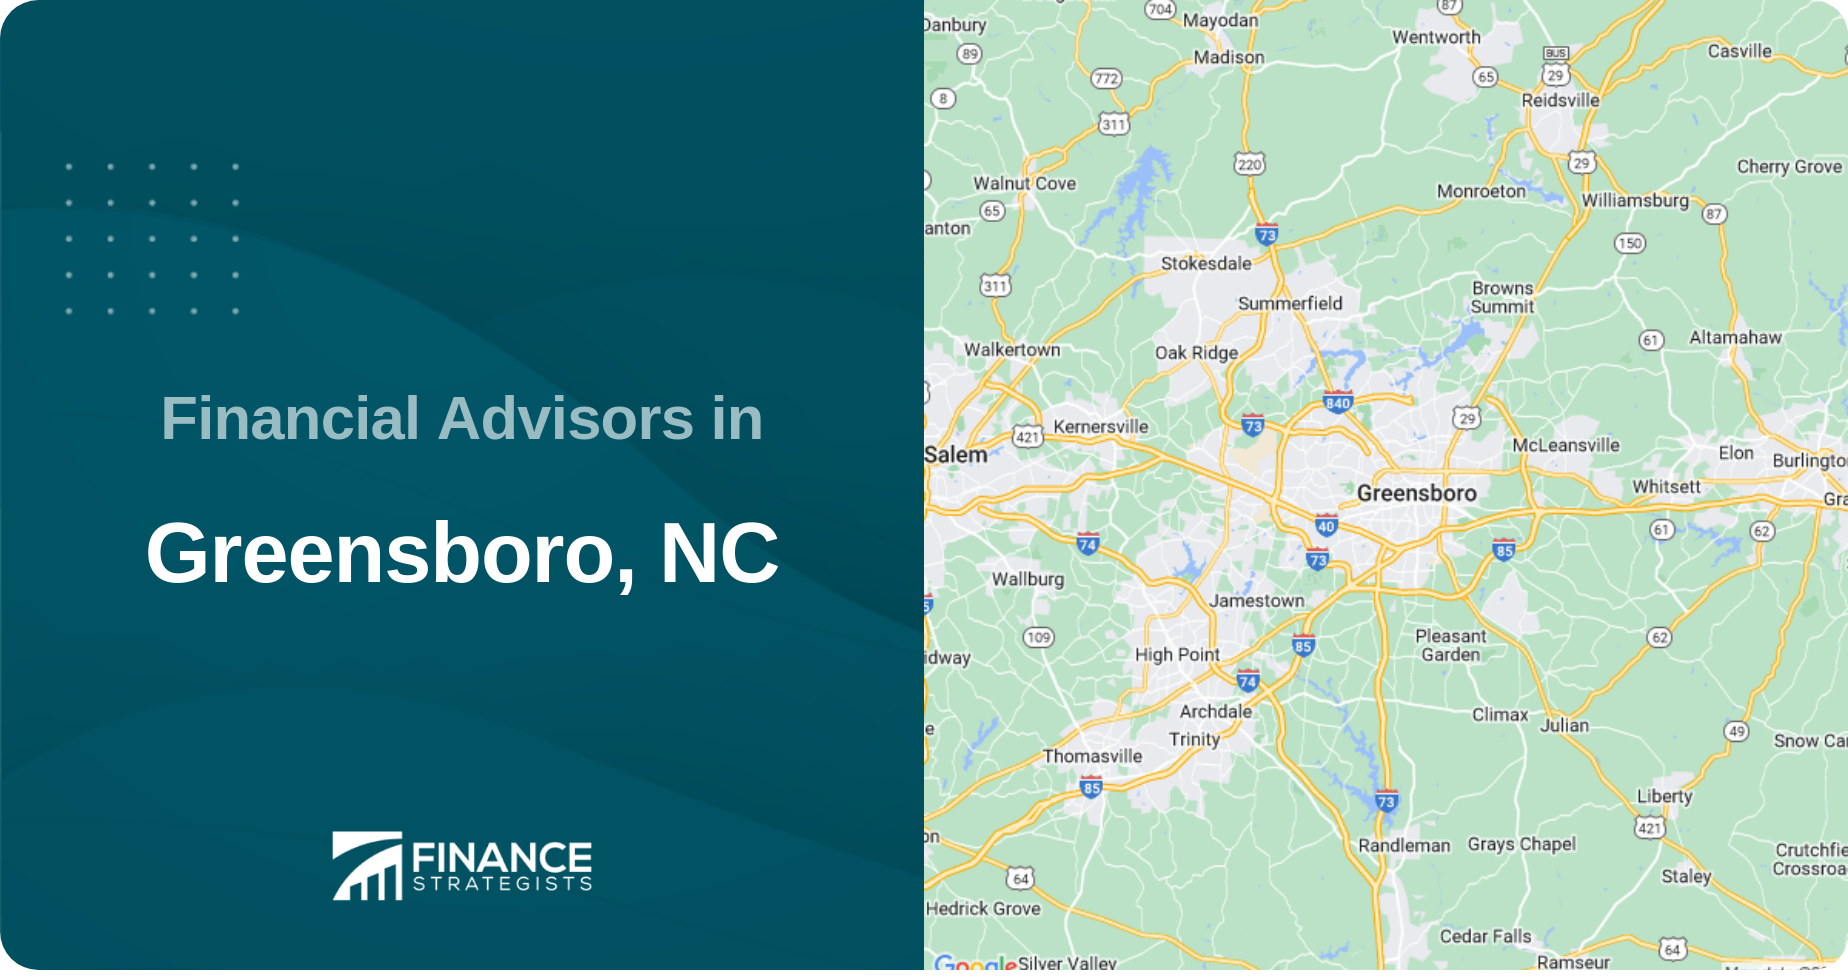 Financial Advisors in Greensboro, NC